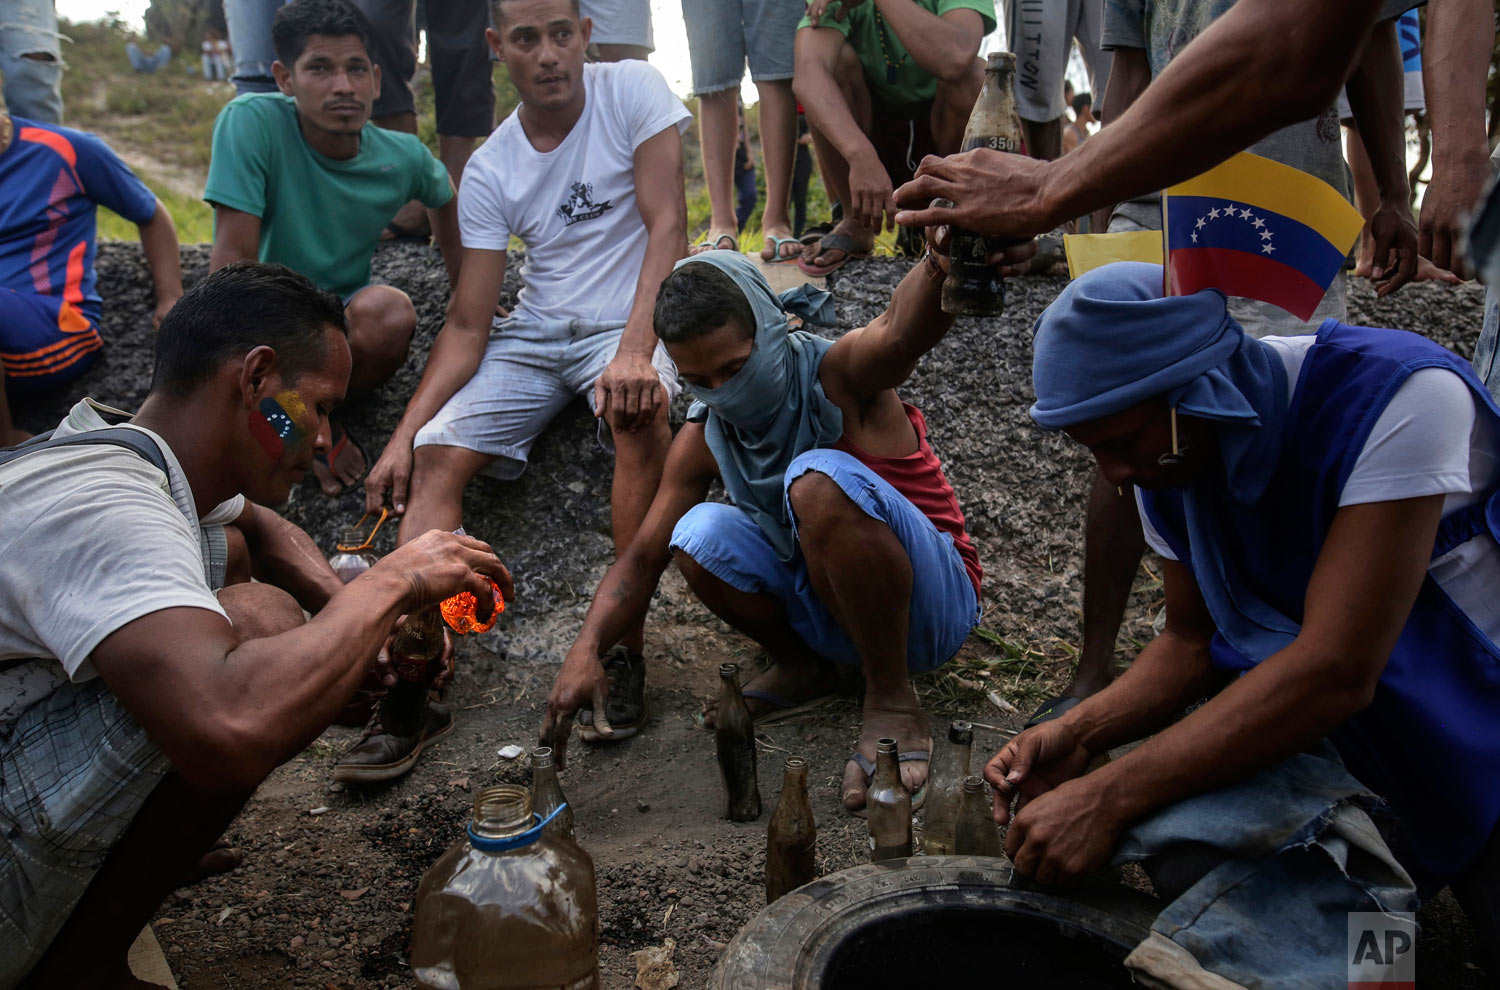  Demonstrators prepare gasoline bombs during a protest at the border between Brazil and Venezuela, in Pacaraima, Roraima state, Brazil, Saturday, Feb.23, 2019. (AP Photo/Ivan Valencia) 